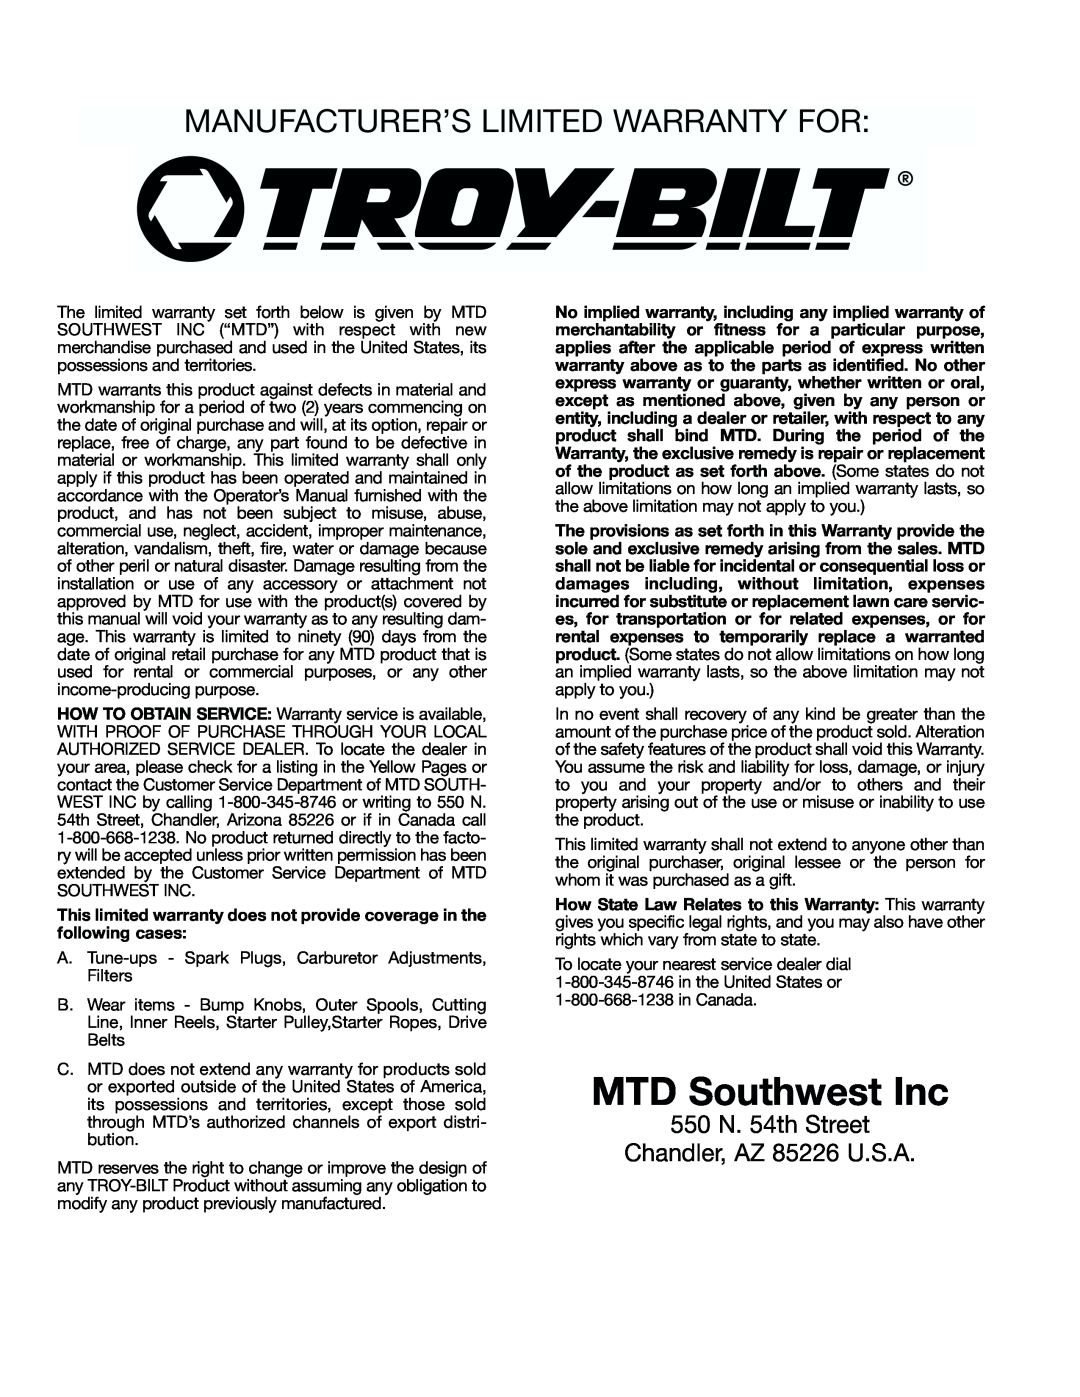 Troy-Bilt TB3000 manual MTD Southwest Inc, Manufacturer’S Limited Warranty For, 550 N. 54th Street Chandler, AZ 85226 U.S.A 